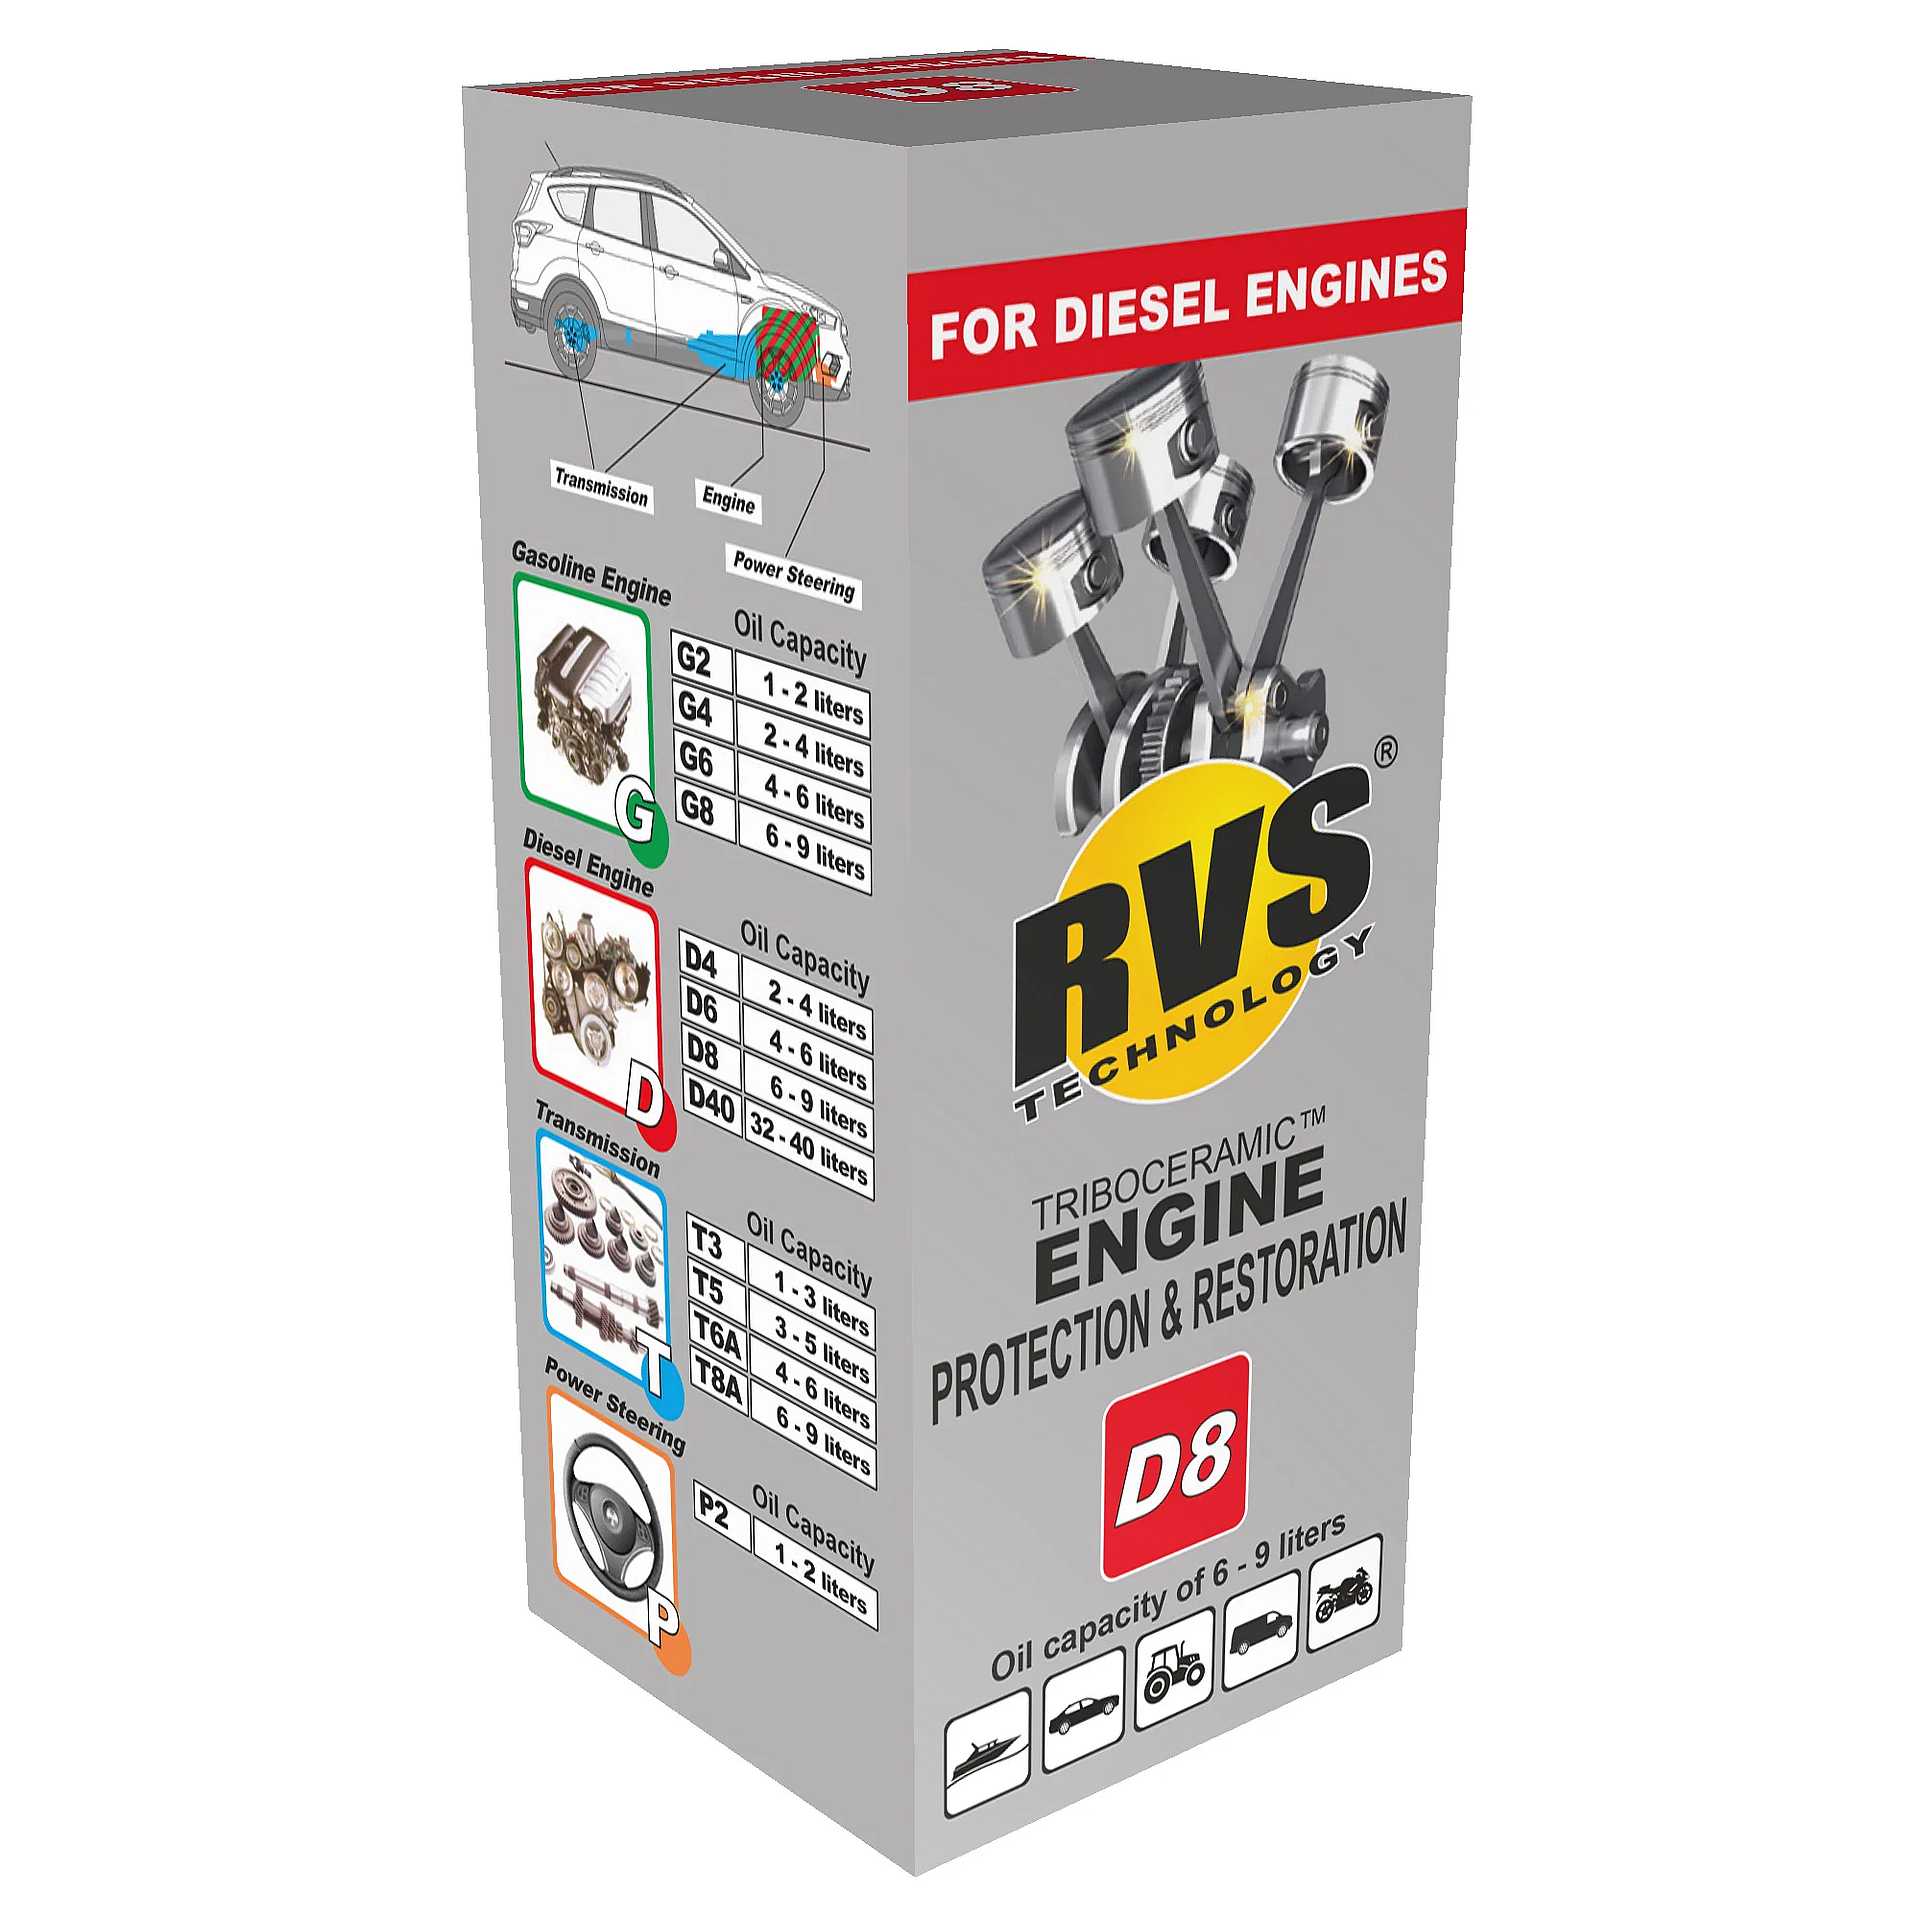 RVS Engine Protection & Restoration D8